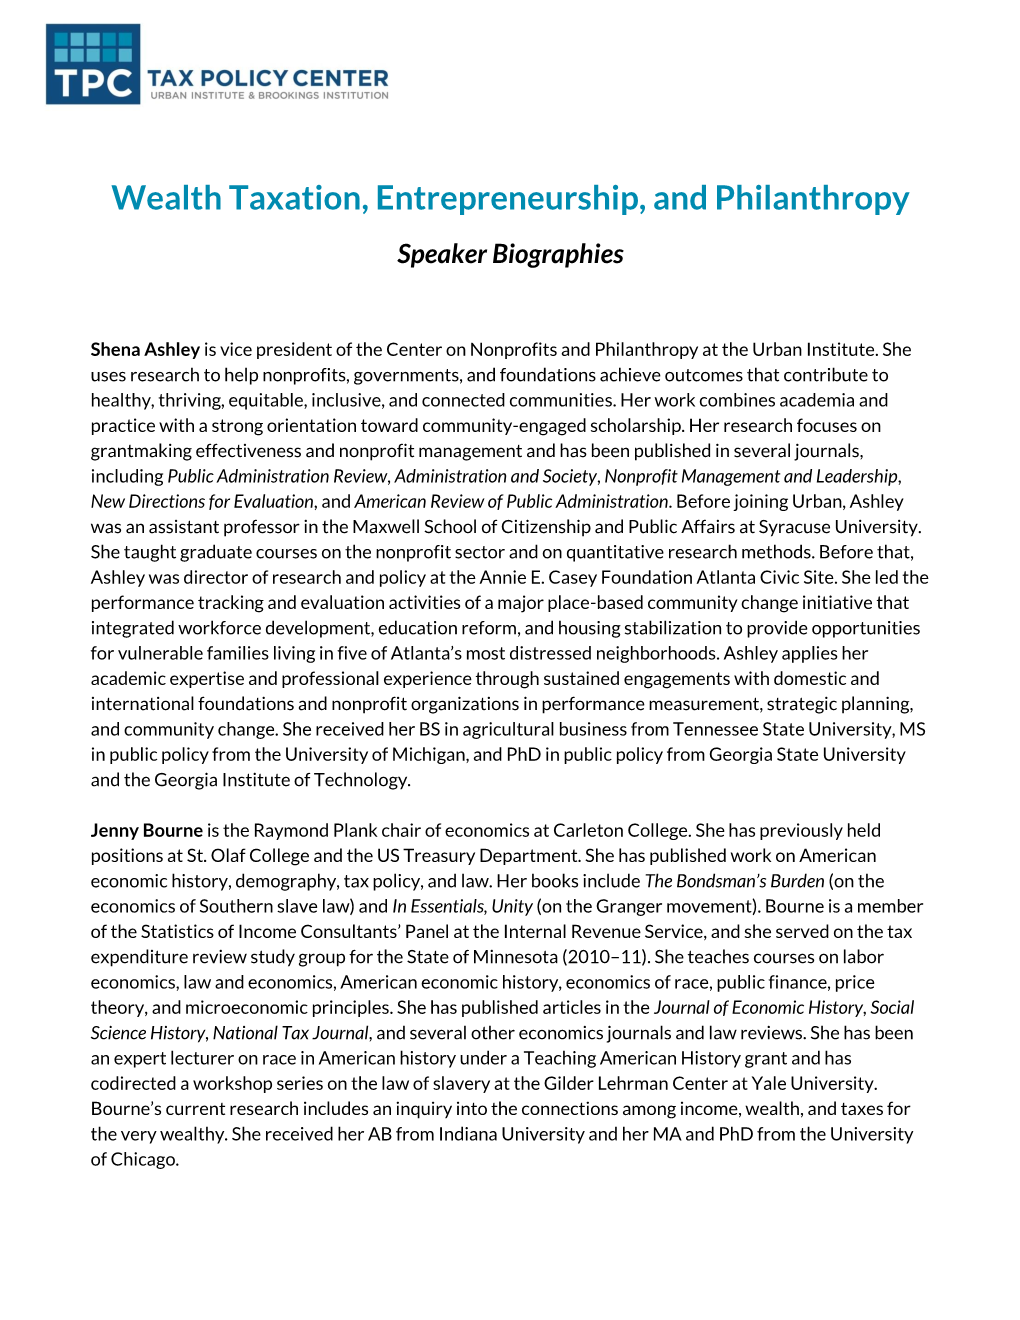 Wealth Taxation, Entrepreneurship, and Philanthropy Speaker Biographies